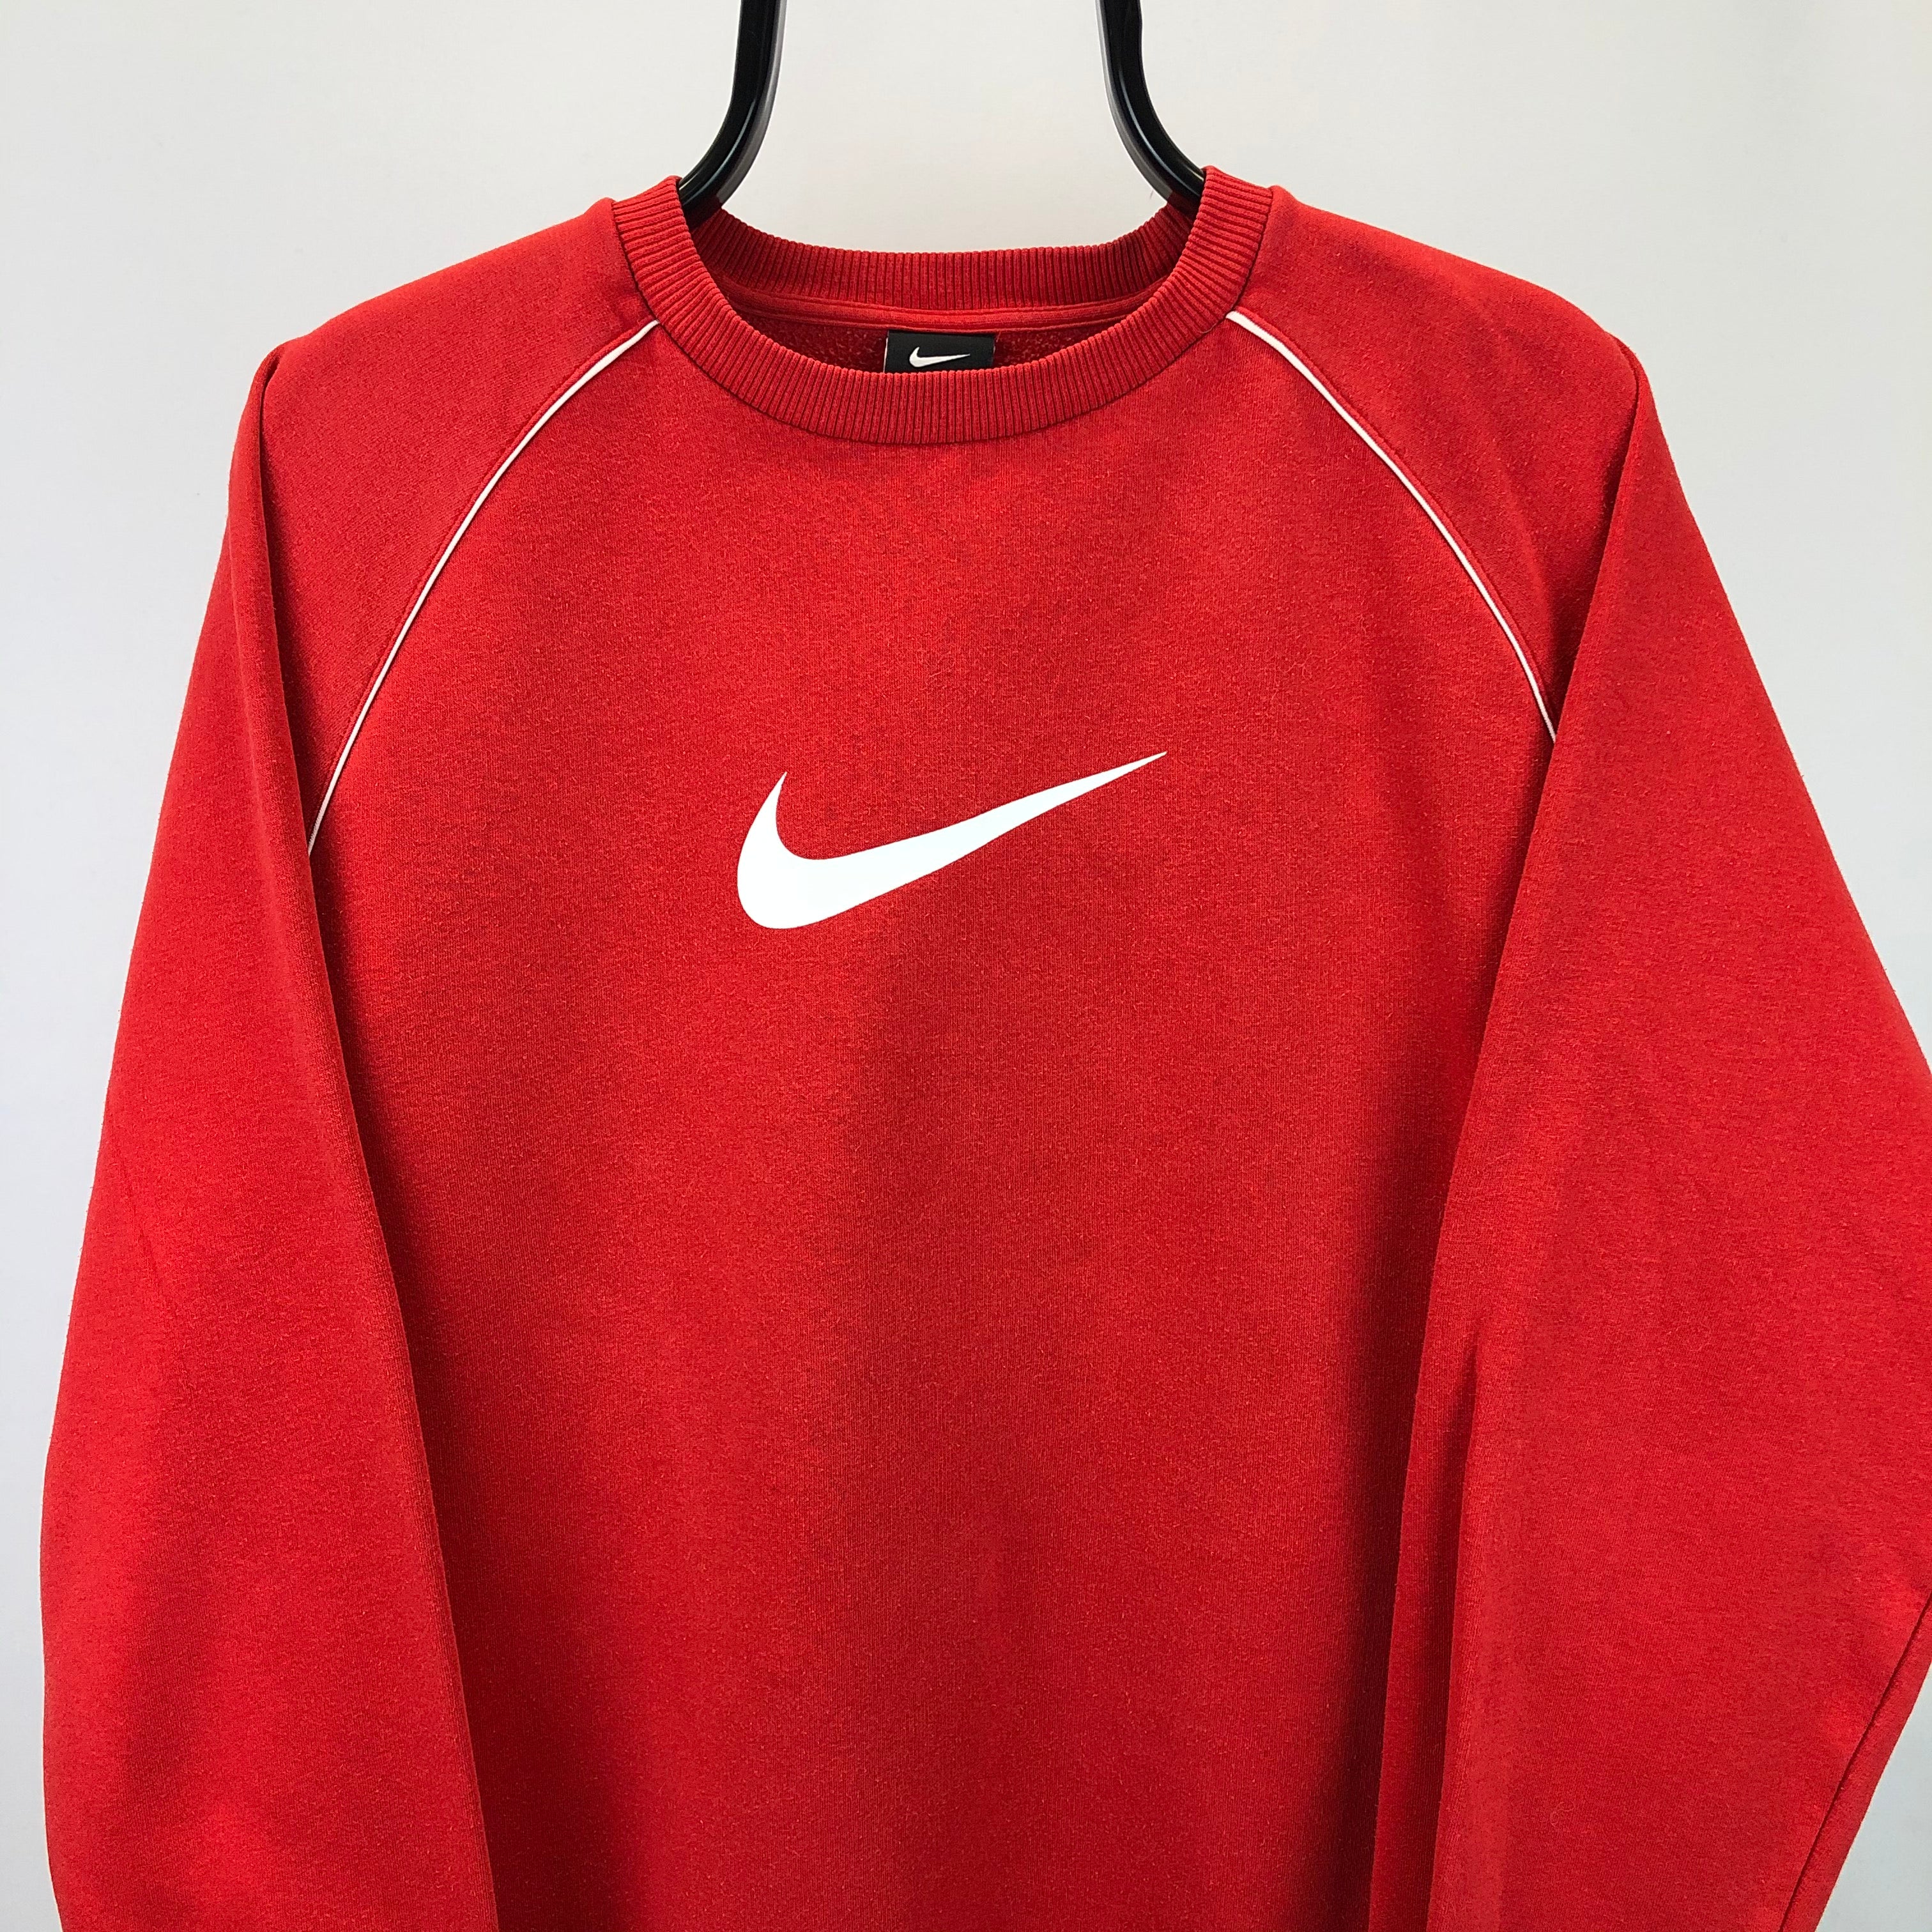 Nike Centre Swoosh Sweatshirt in Red/White - Men's Large/Women's XL ...